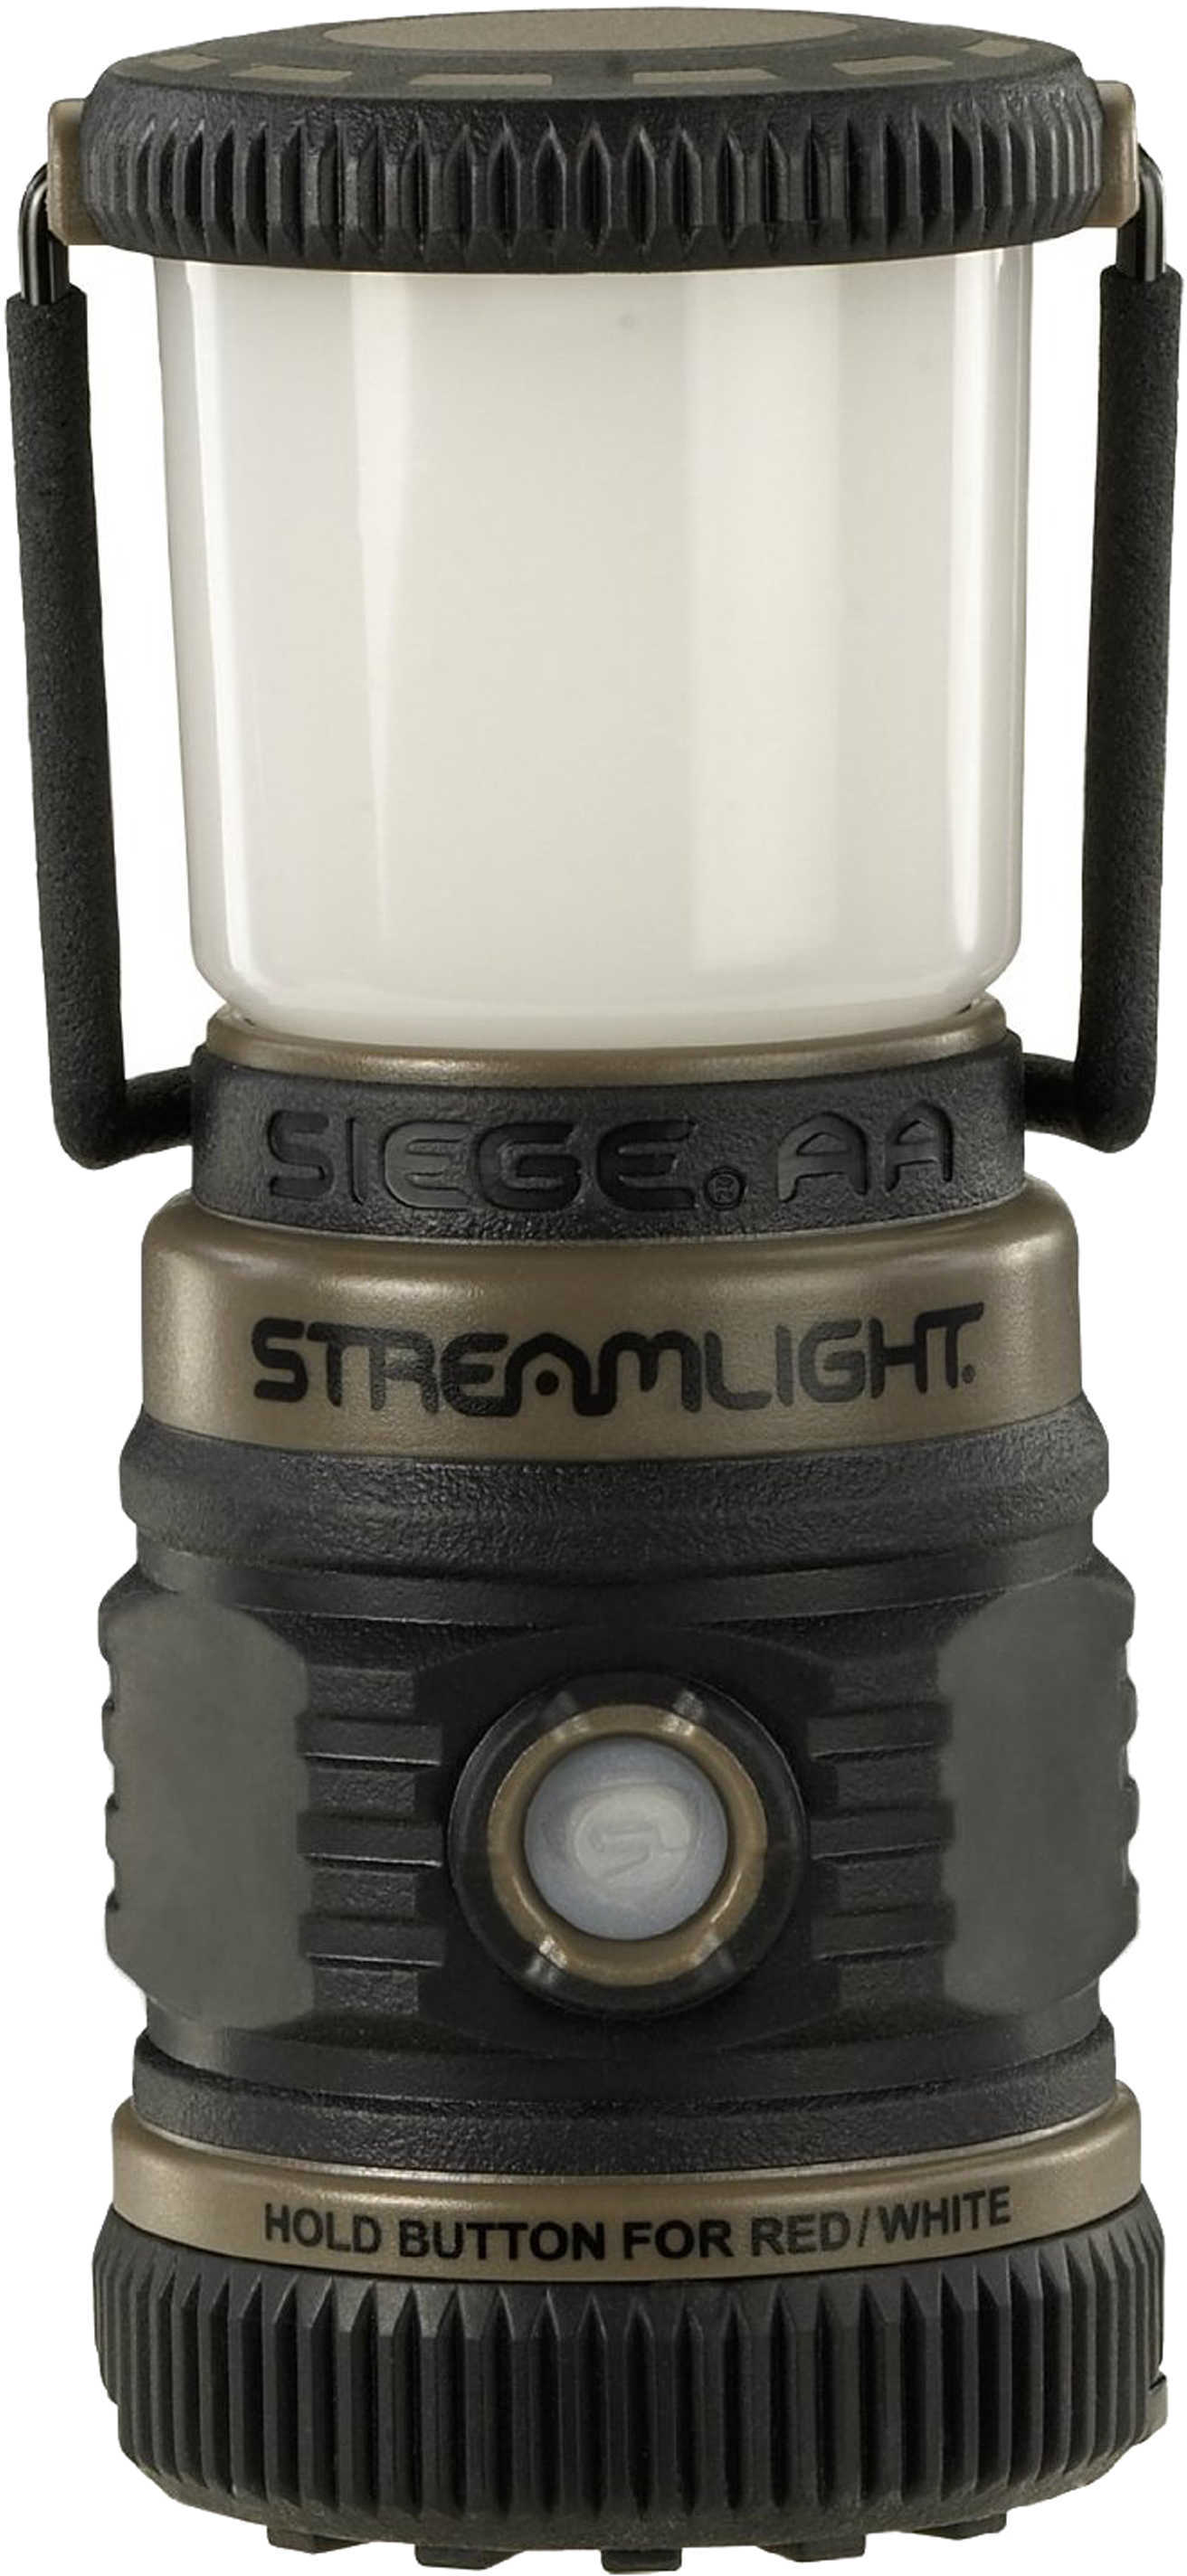 Streamlight Siege AA WHT C4 Led 200LUM 7 HR- Coyote